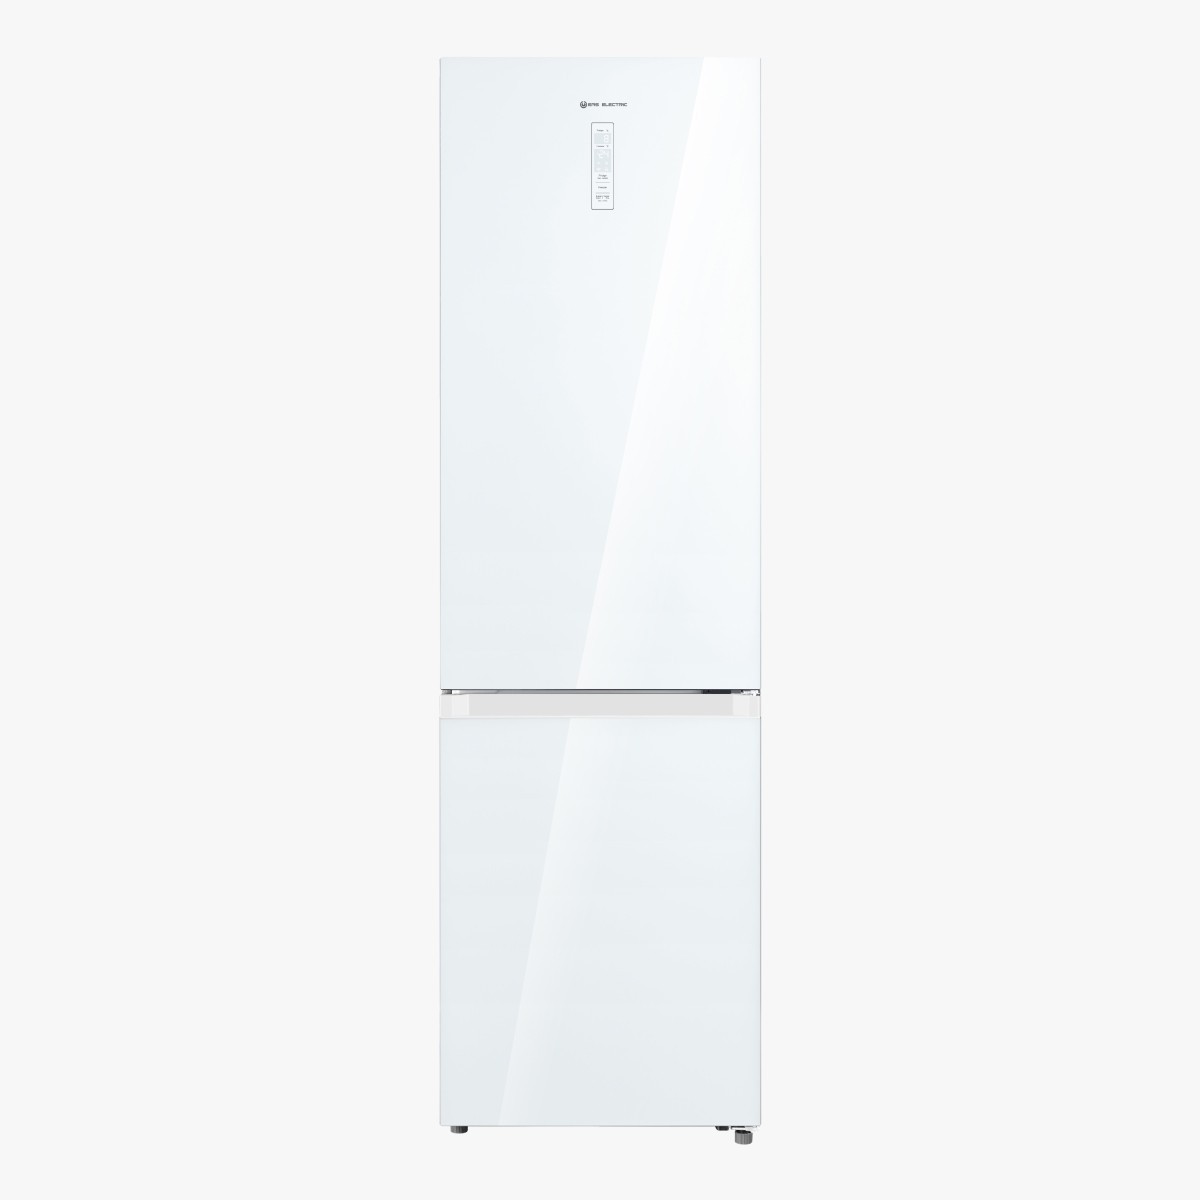 Embellecedor blanco posterior bandeja frigorífico Electrolux 2425096019